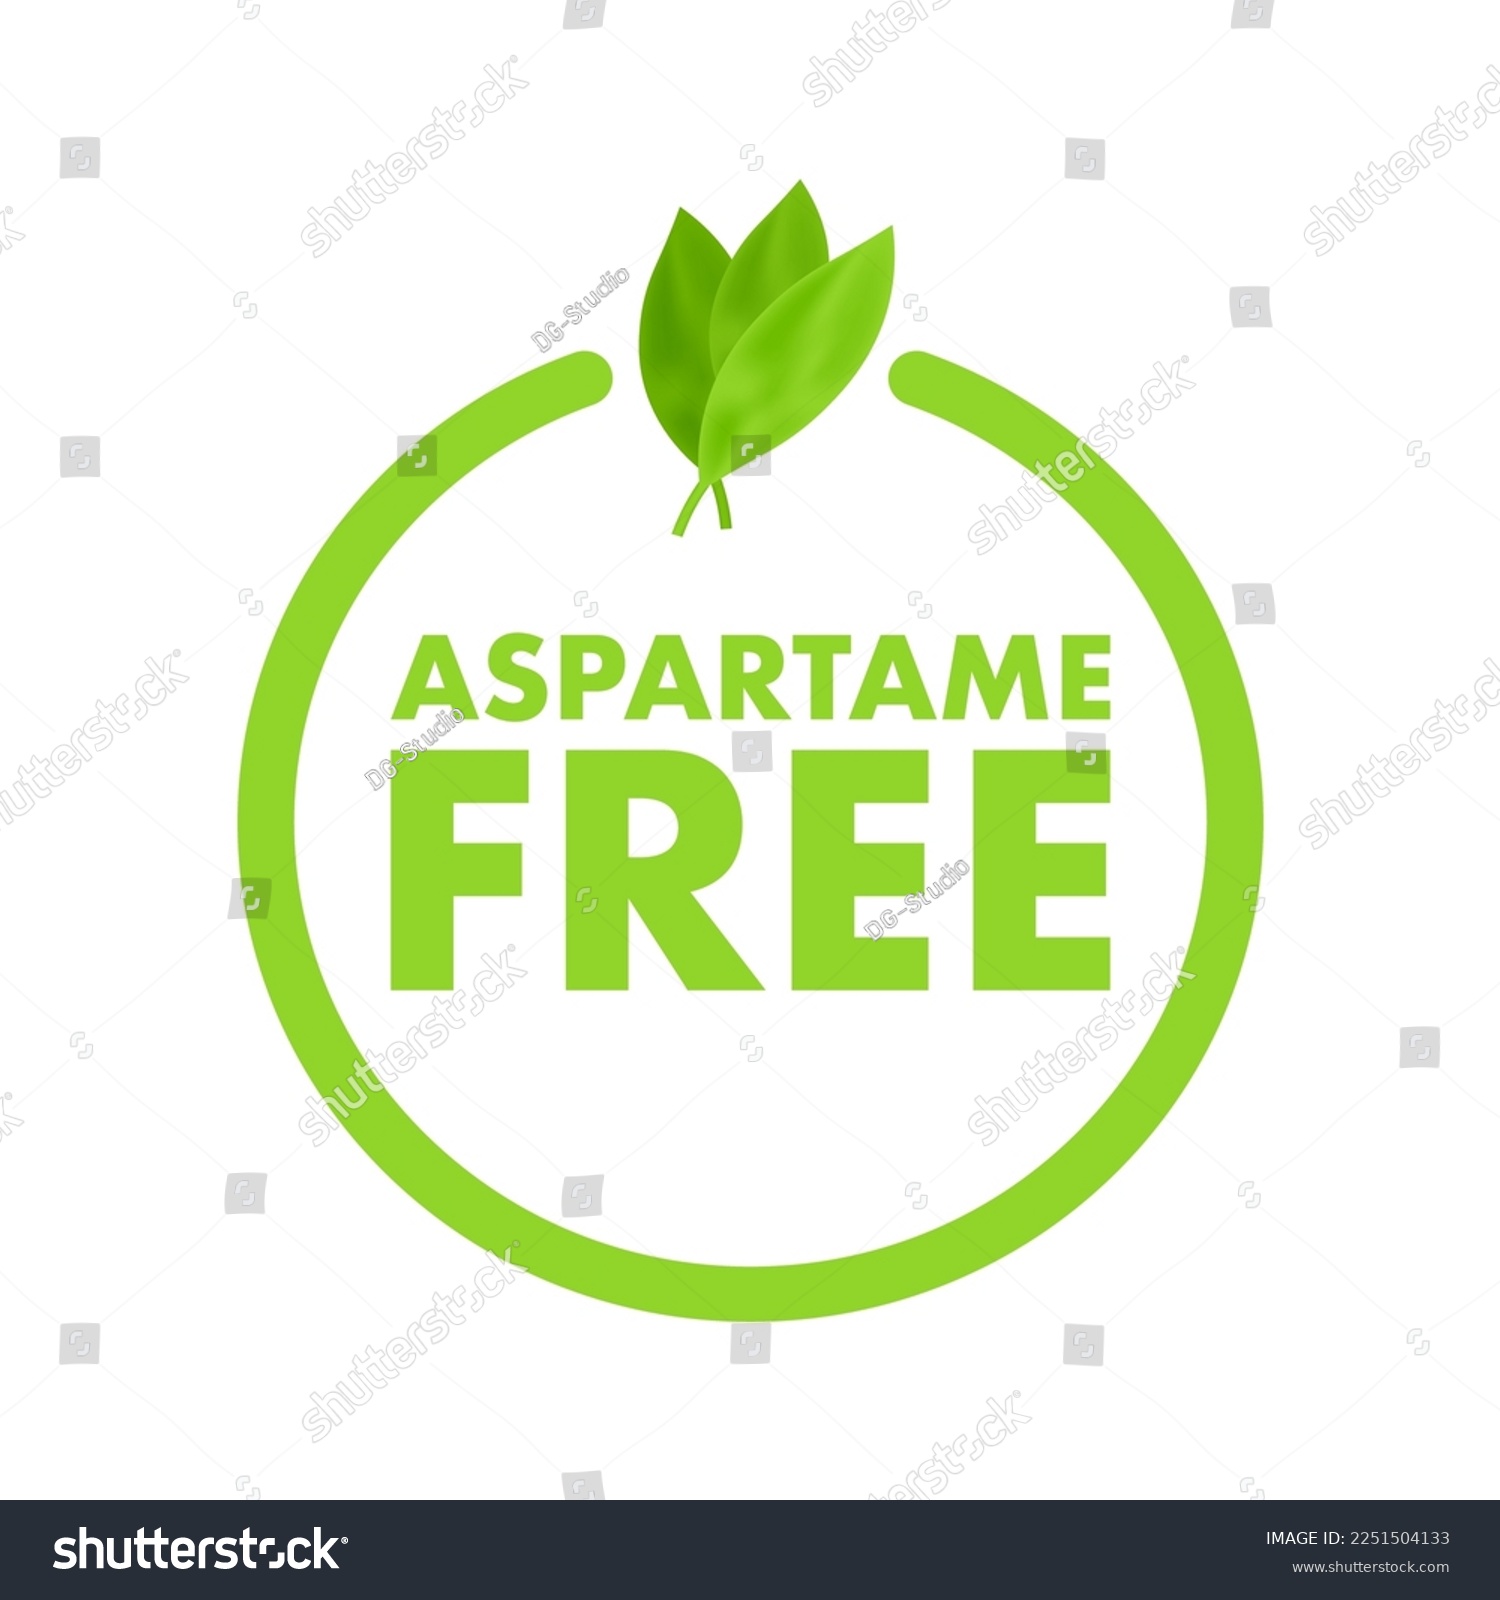 SVG of Aspartame free icon, label. Aspartame artificial sweetener free. Vector stock illustration. svg